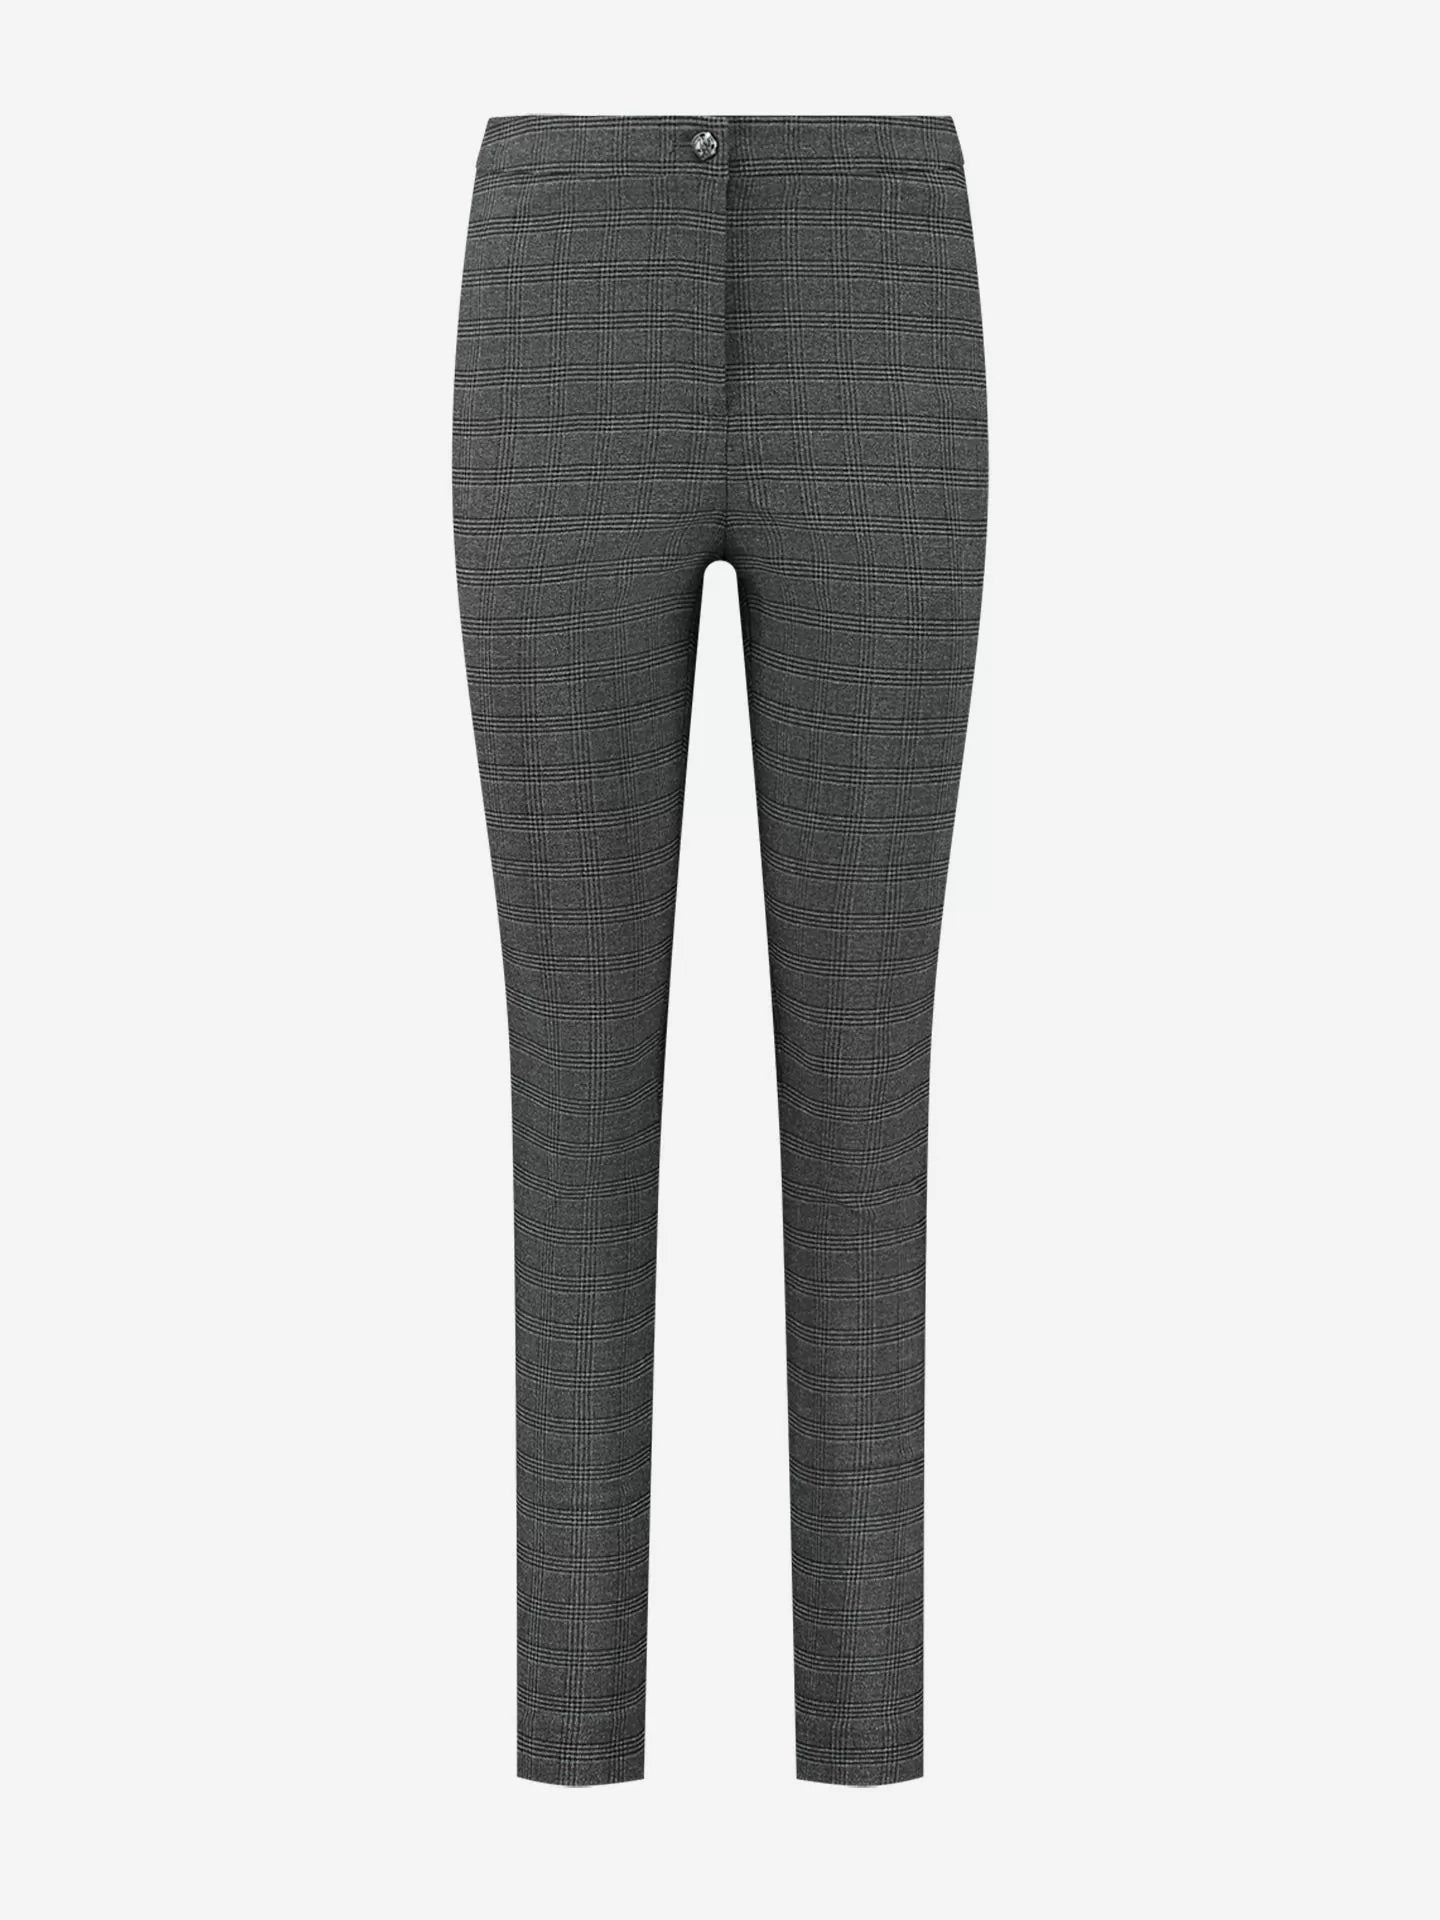 Nikkie Alaska pants - grey/black